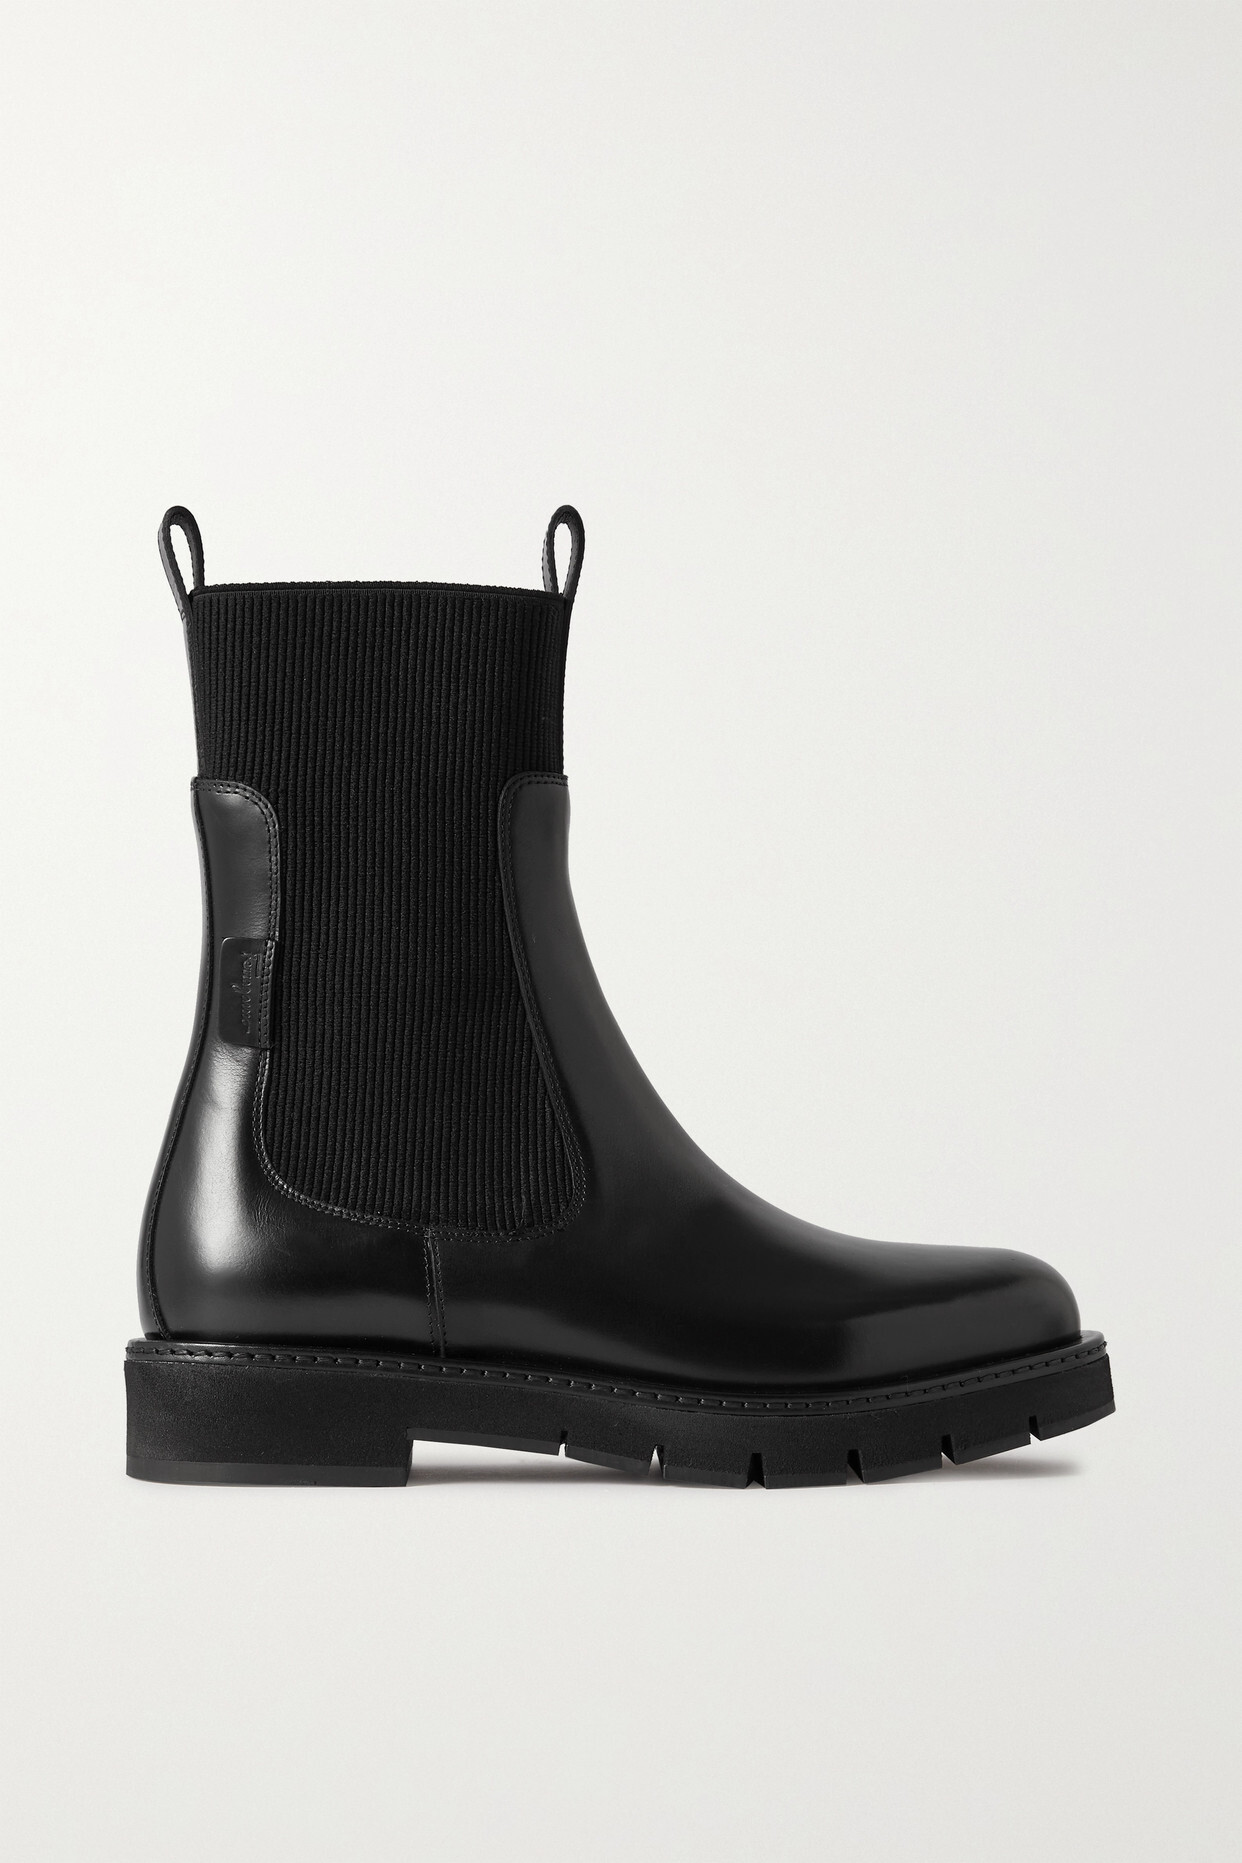 Salvatore Ferragamo - Rook Leather Chelsea Boots - Black